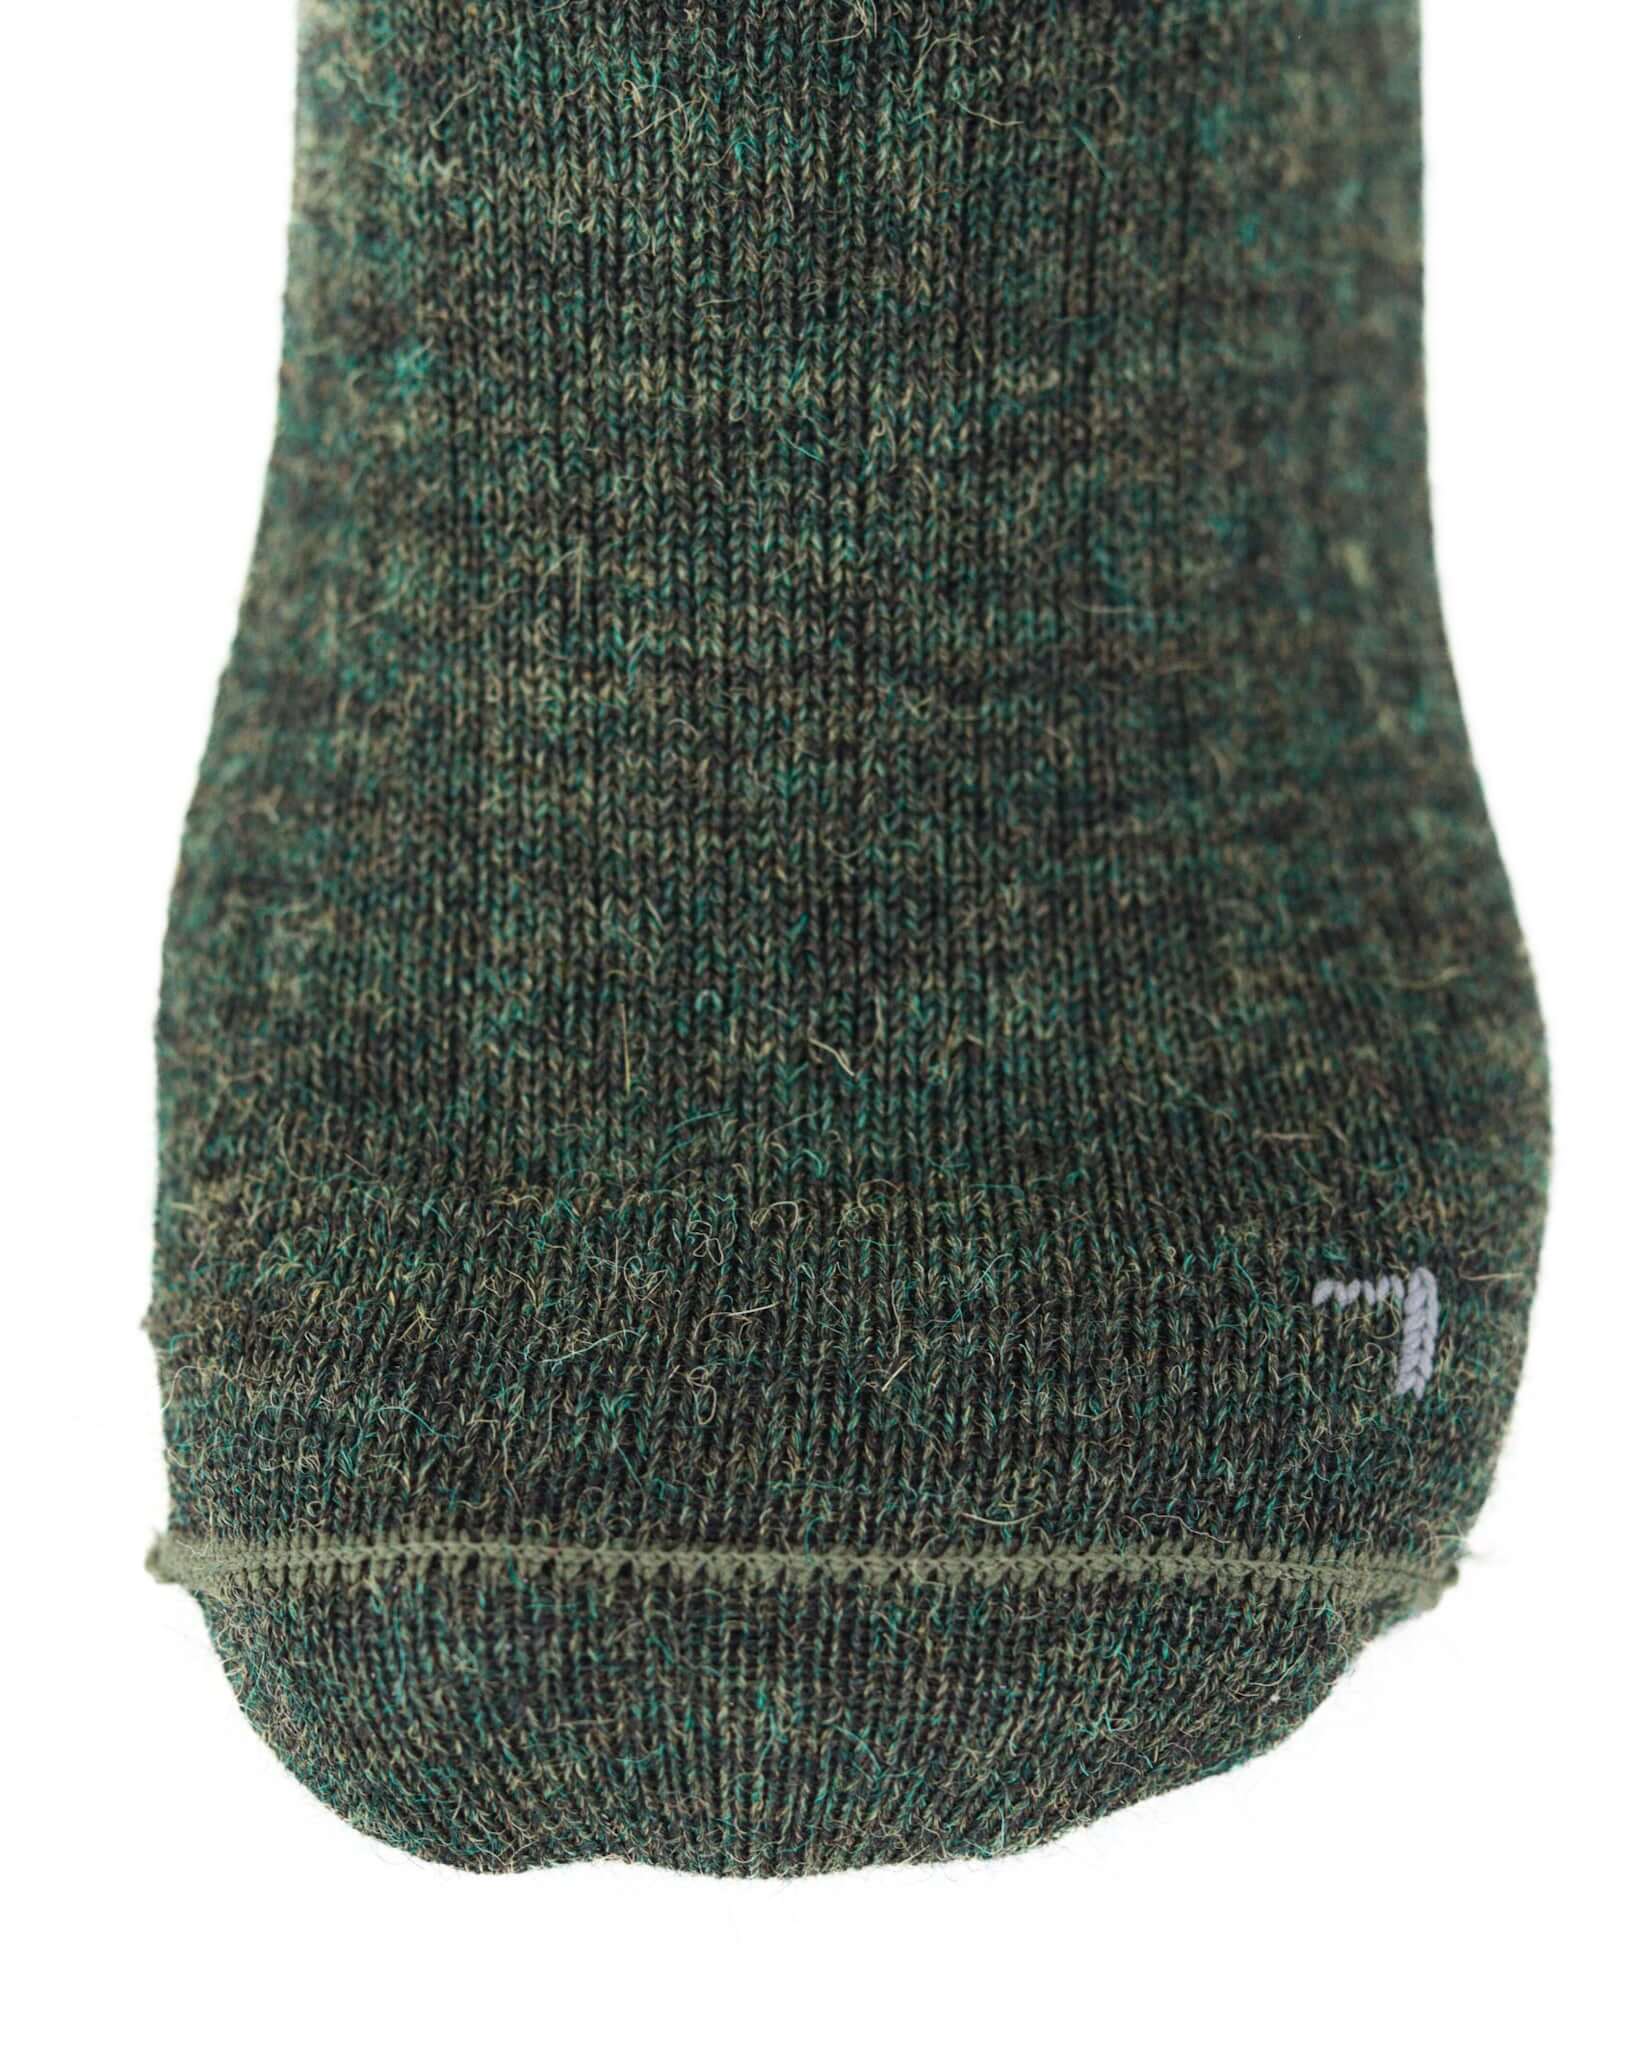 Huura - Socke aus Alpakawolle